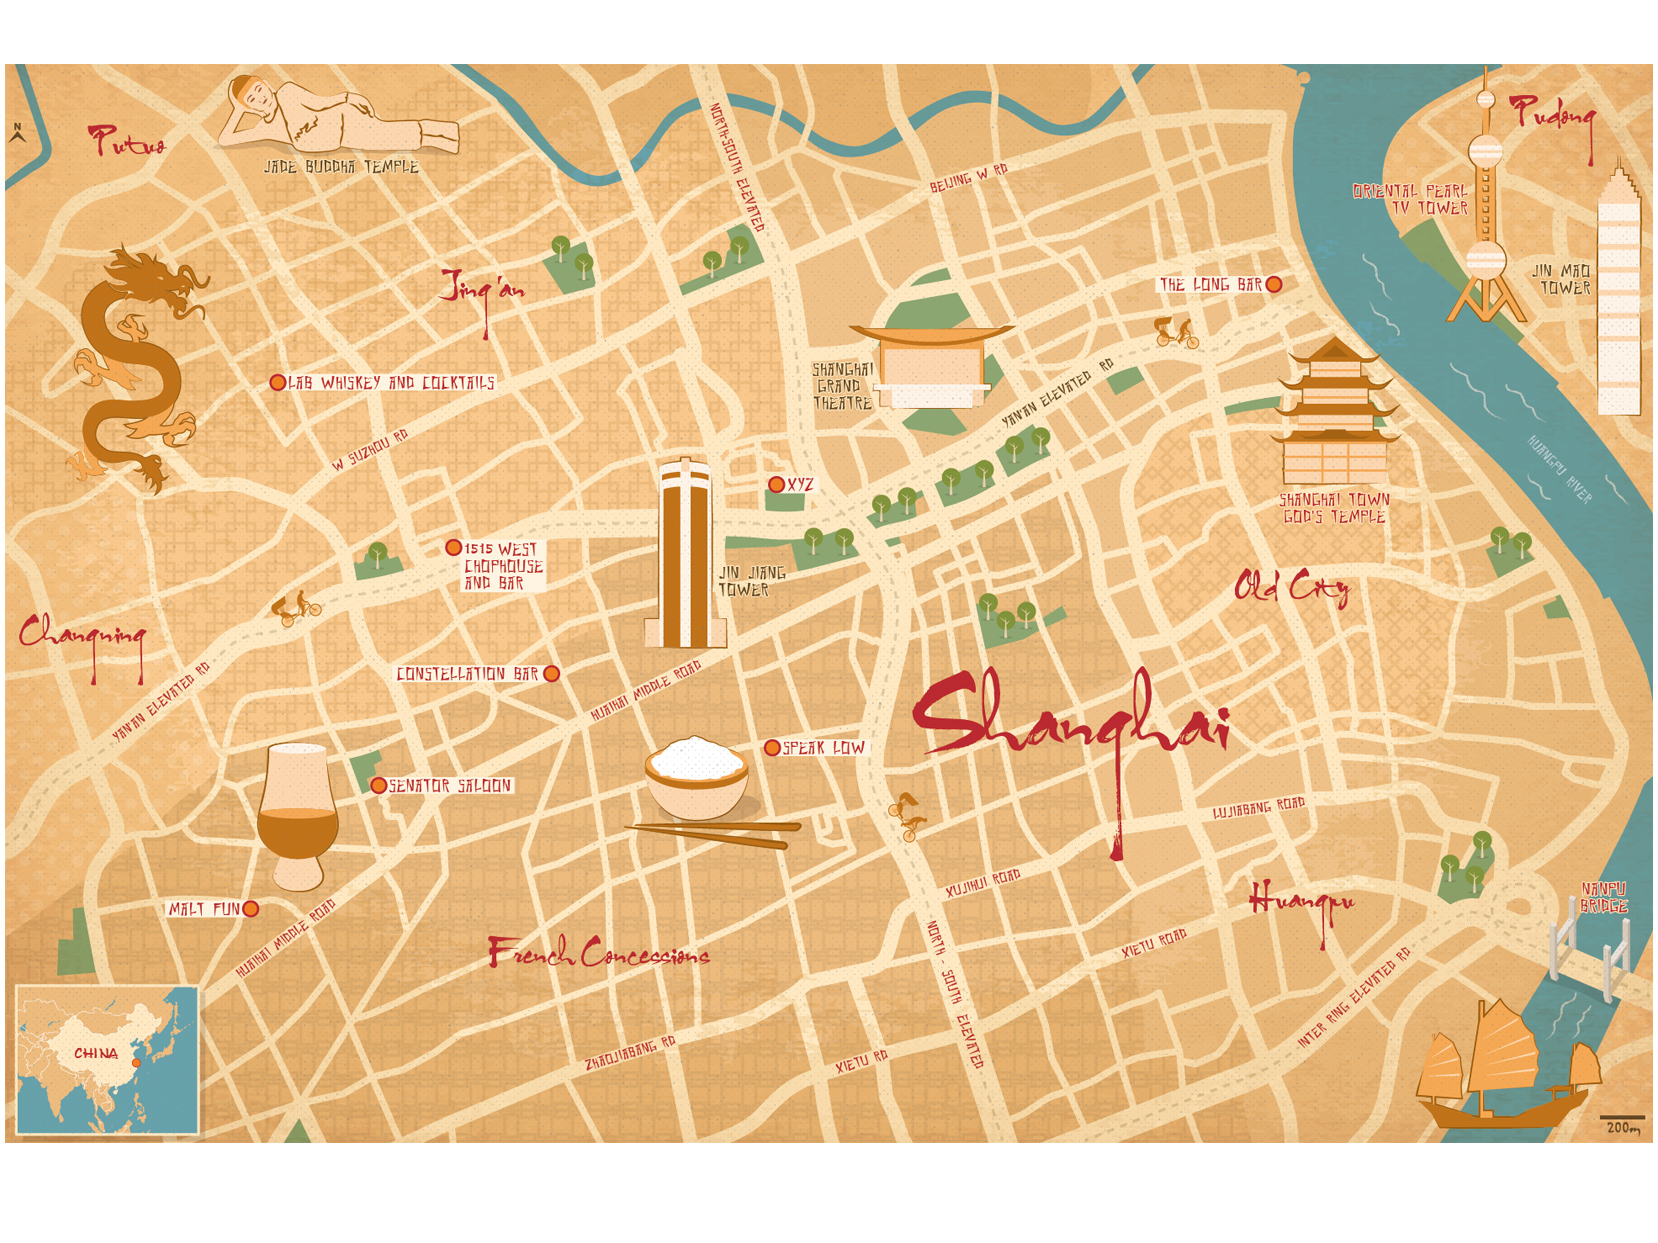 Shanghai illustrated Map by Jason Pickersgill on Dribbble